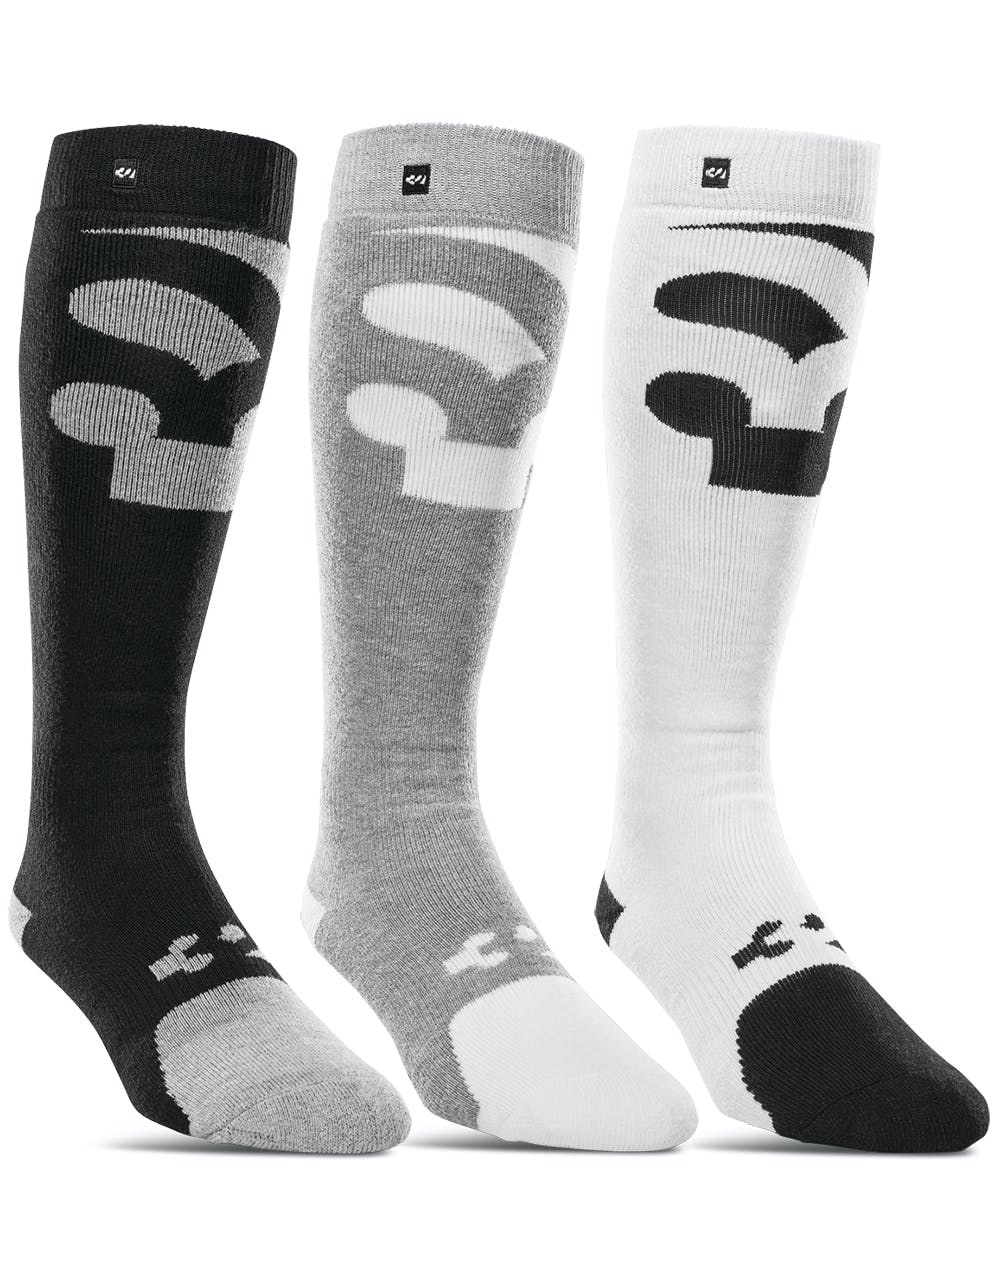 ThirtyTwo Cut Out Snowboard Socks - Grey/Black/WhiteGrey/Black/White